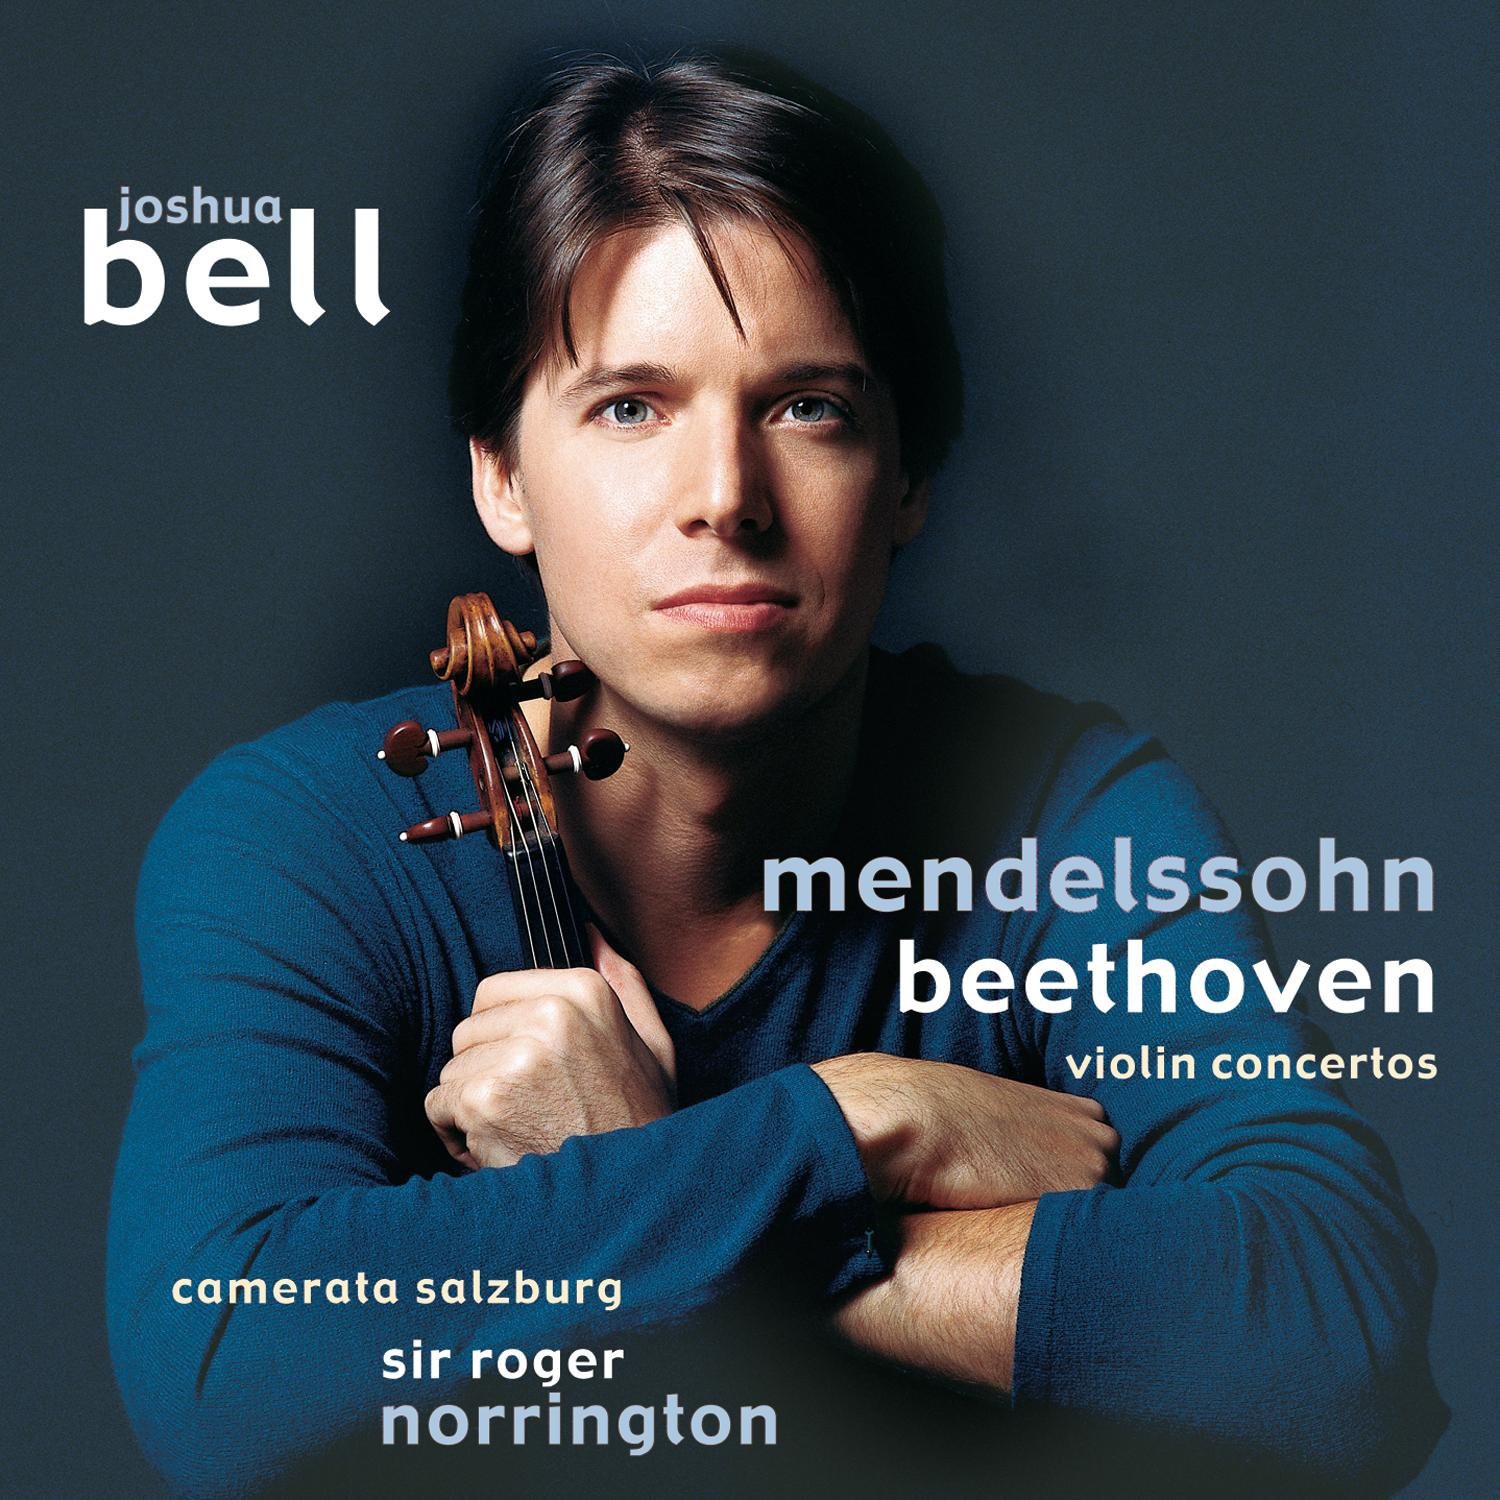 Joshua violin. Joshua Bell Violin. Джошуа Белл слушать. Embertone - Joshua Bell Violin. Joshua Bell Violin Kontakt.